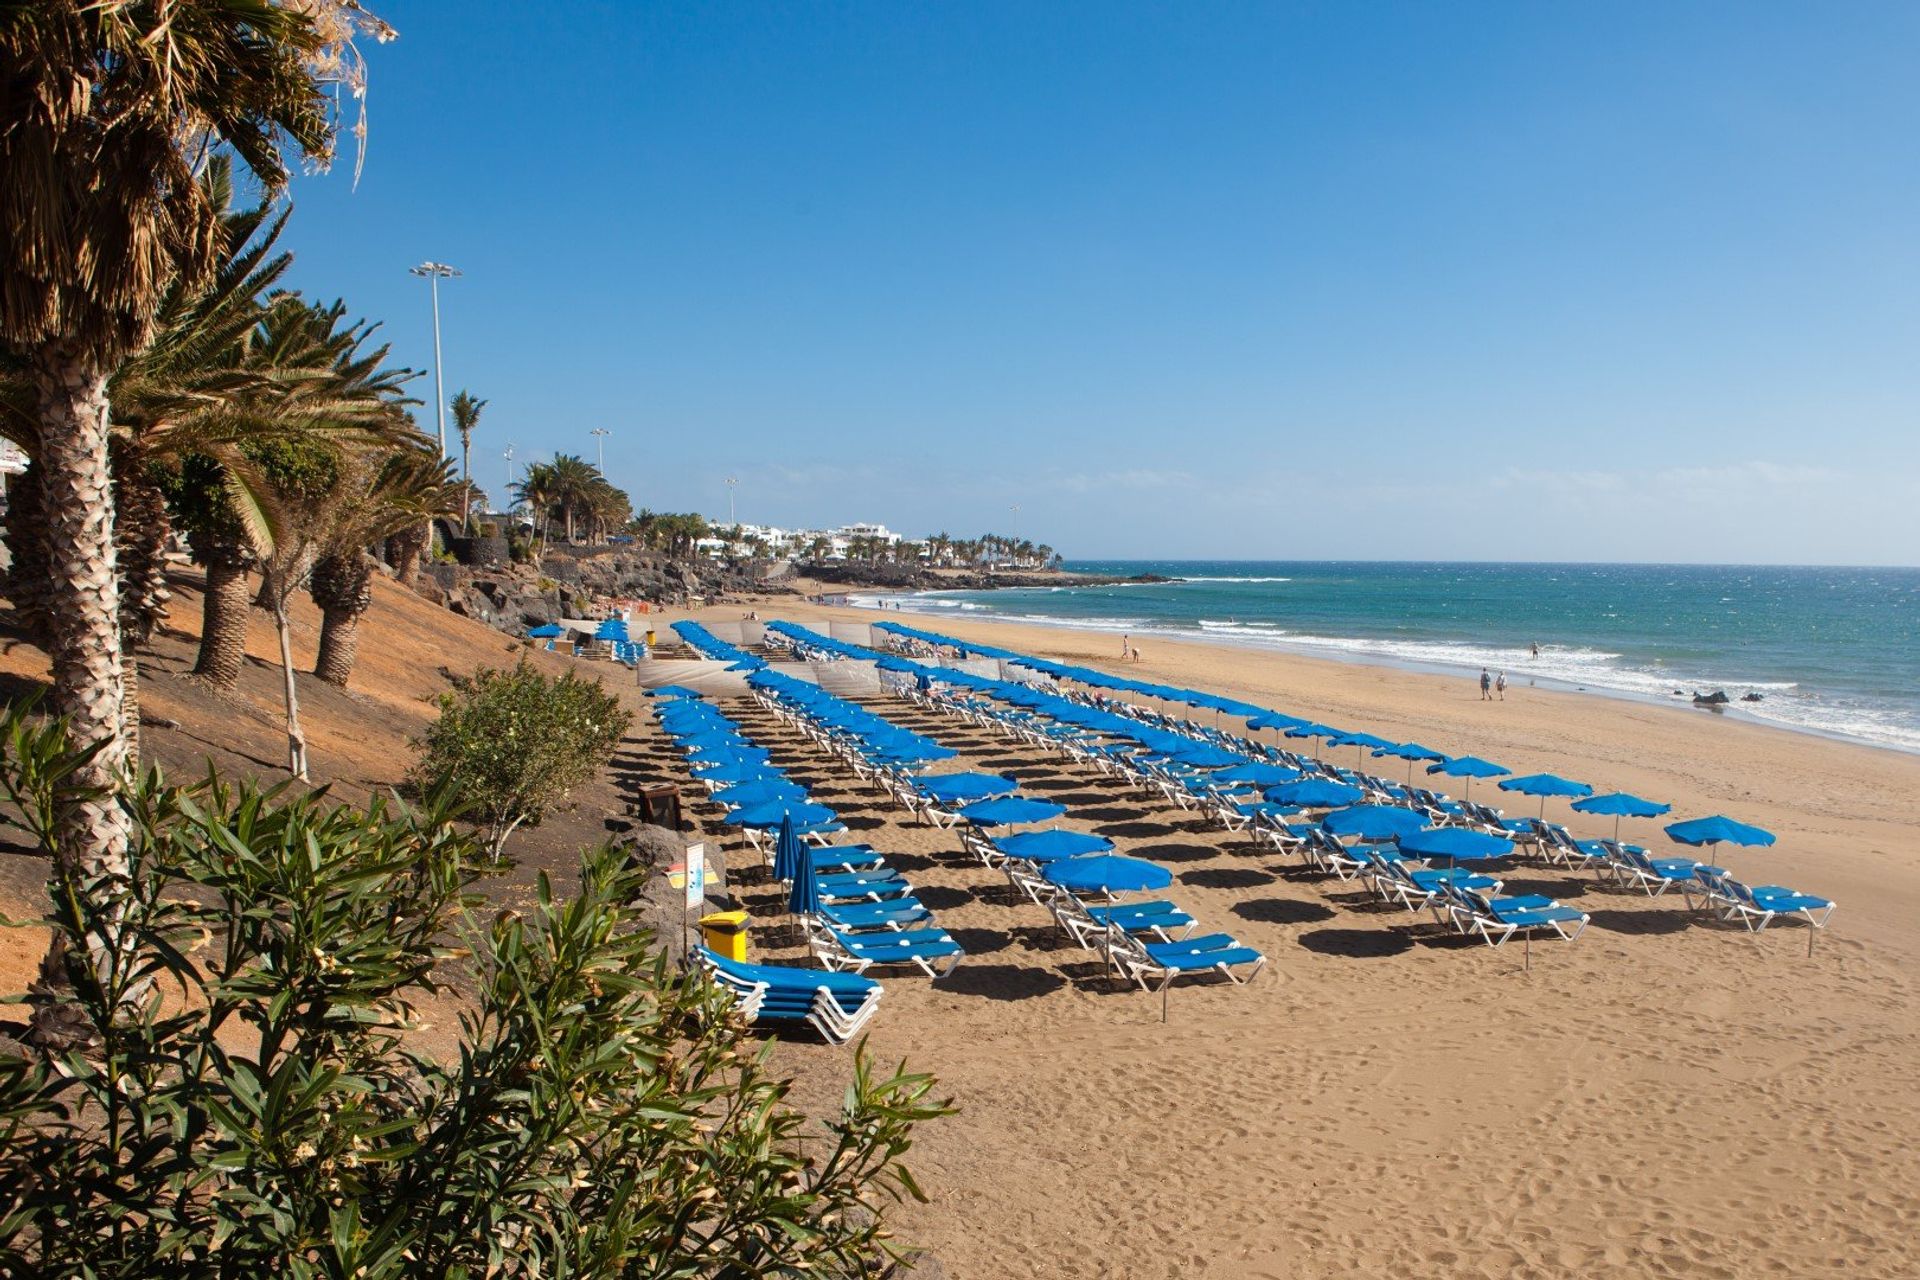 Blue sunbeds dotted along the golden sandy coastline of Playa Grande beach